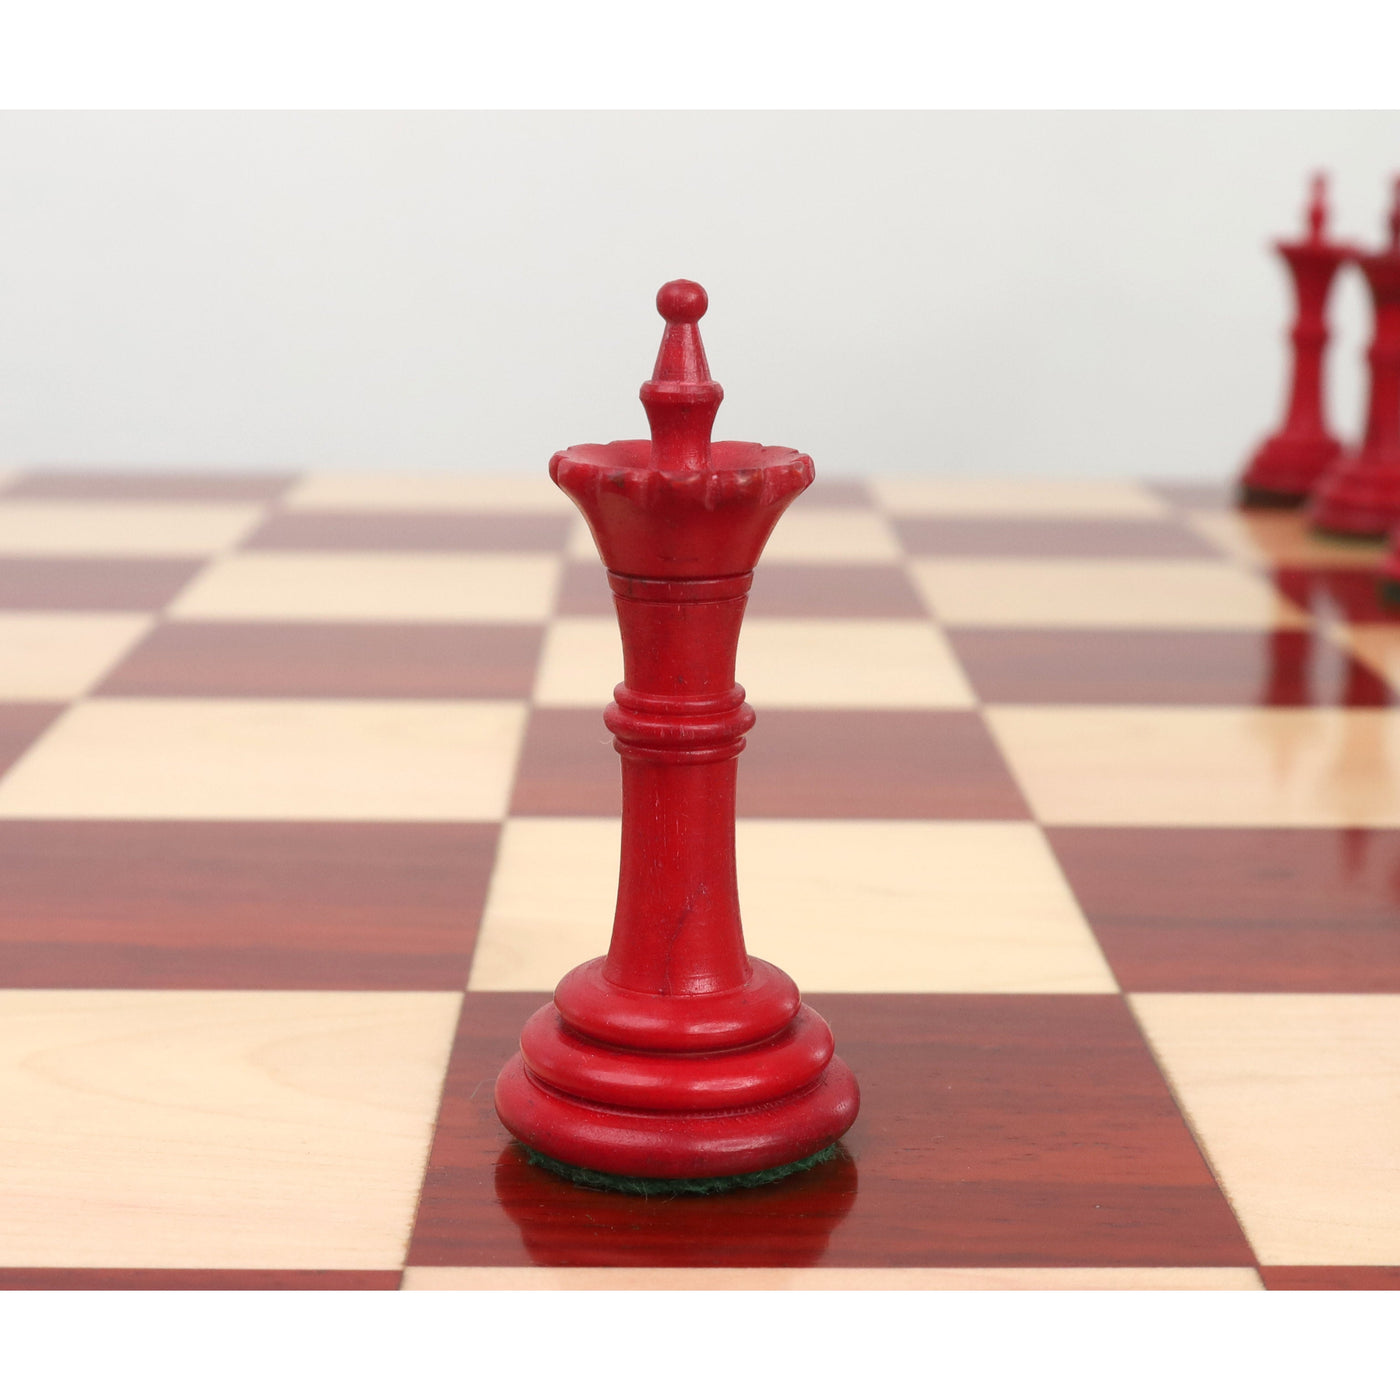 4.6″ Turkish Tower Pre-Staunton Chess Set - Chess Pieces Only-Crimson & White Camel Bone